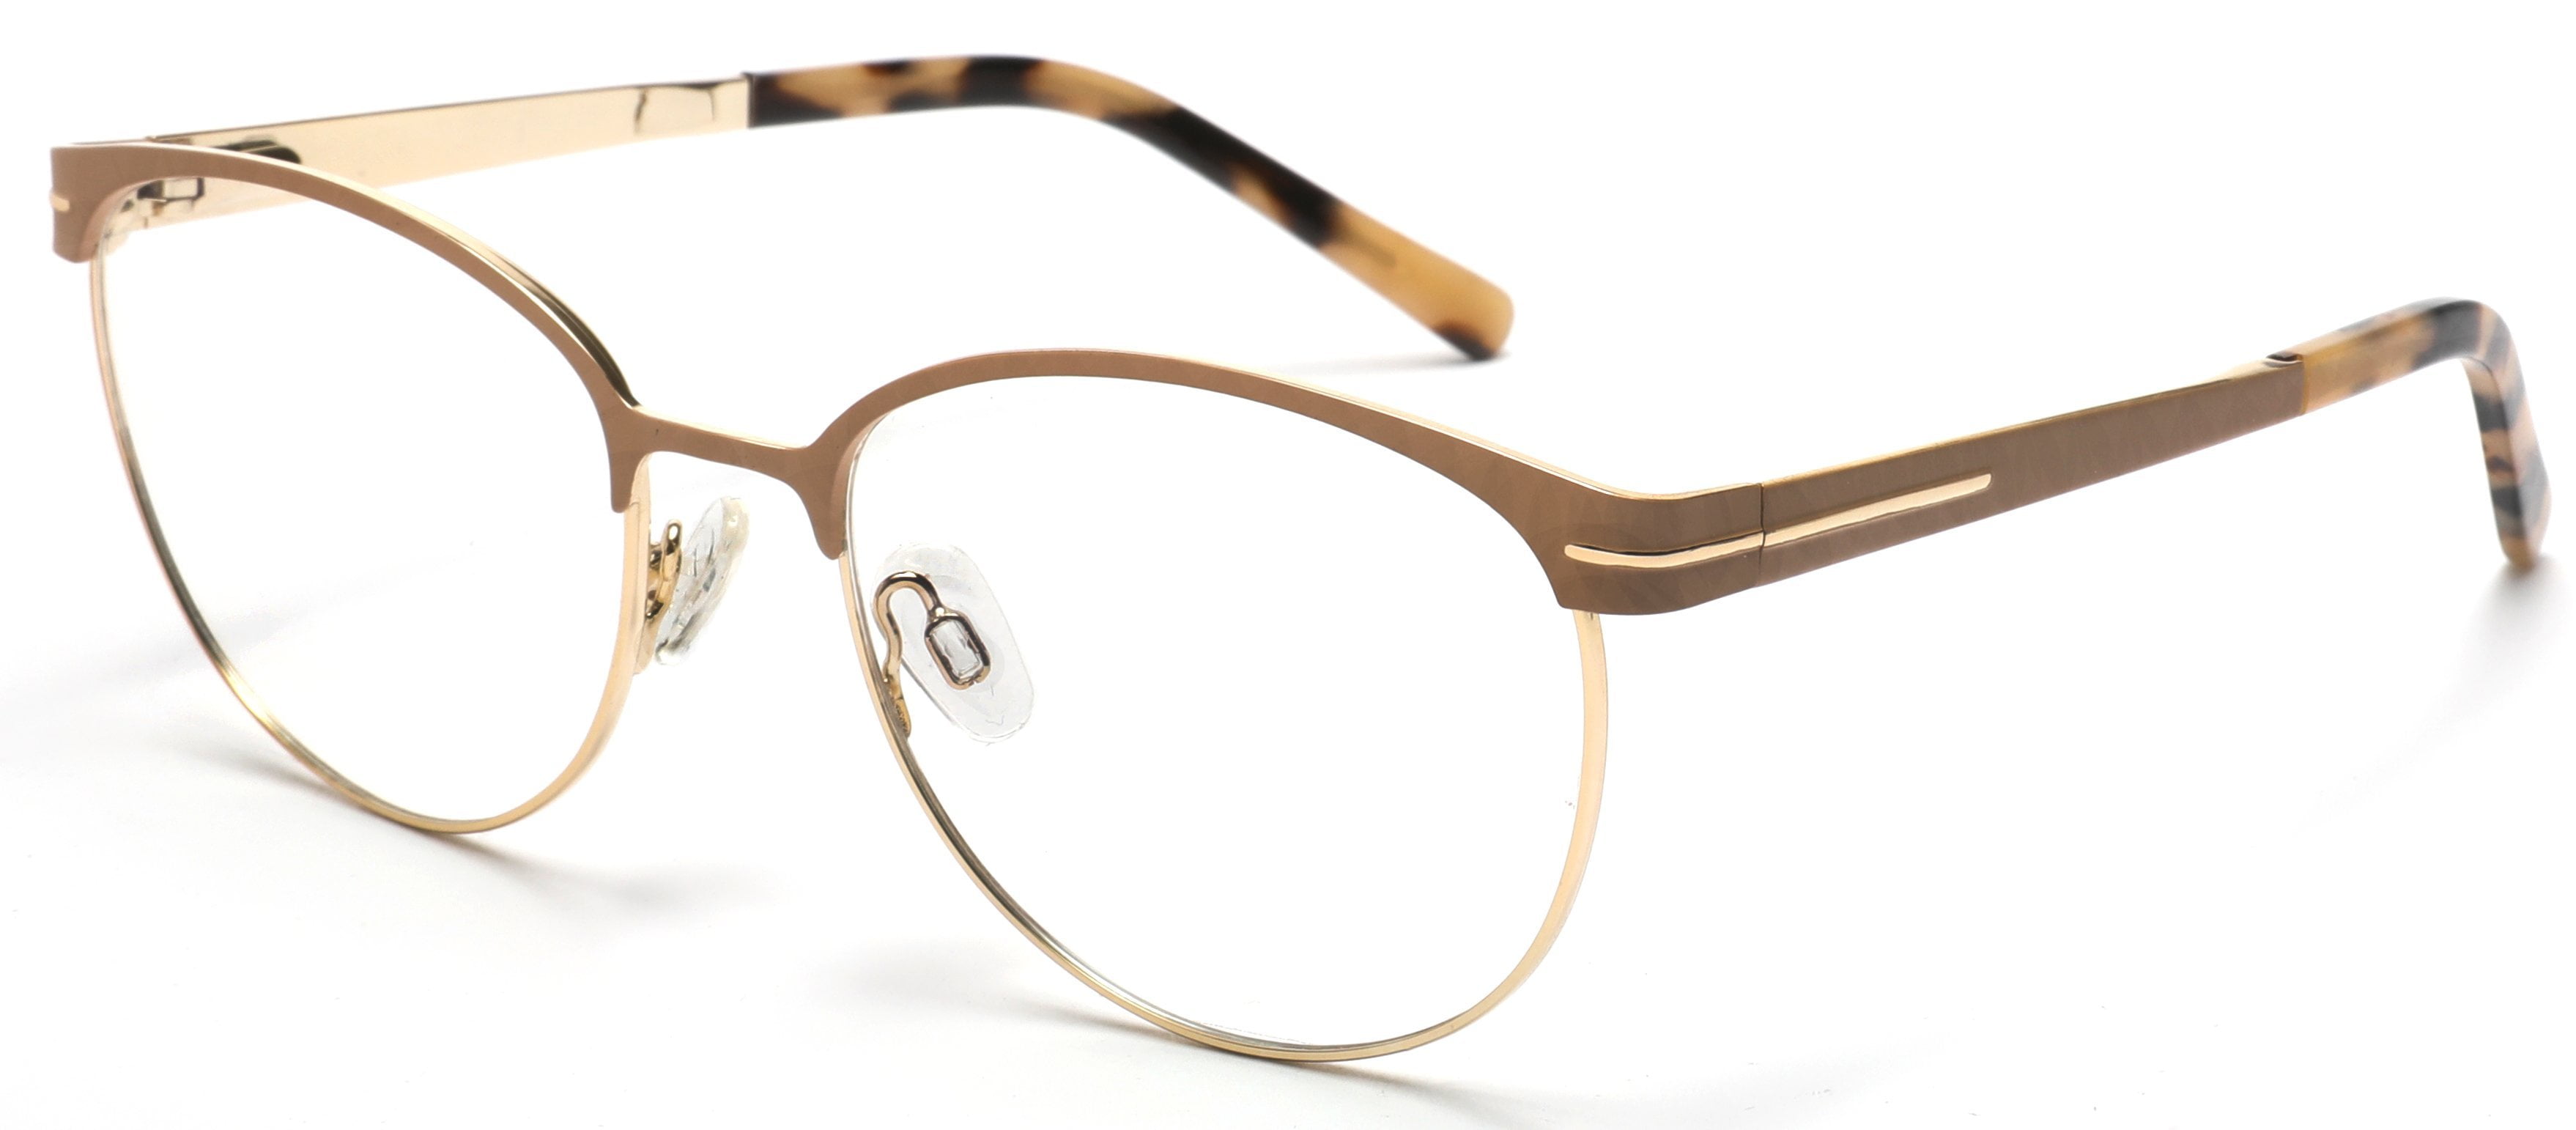 Tango Optics Oval Metal Eyeglasses Frame Luxe Rx Stainless Steel Elisabeth Noelle Neumann Gold